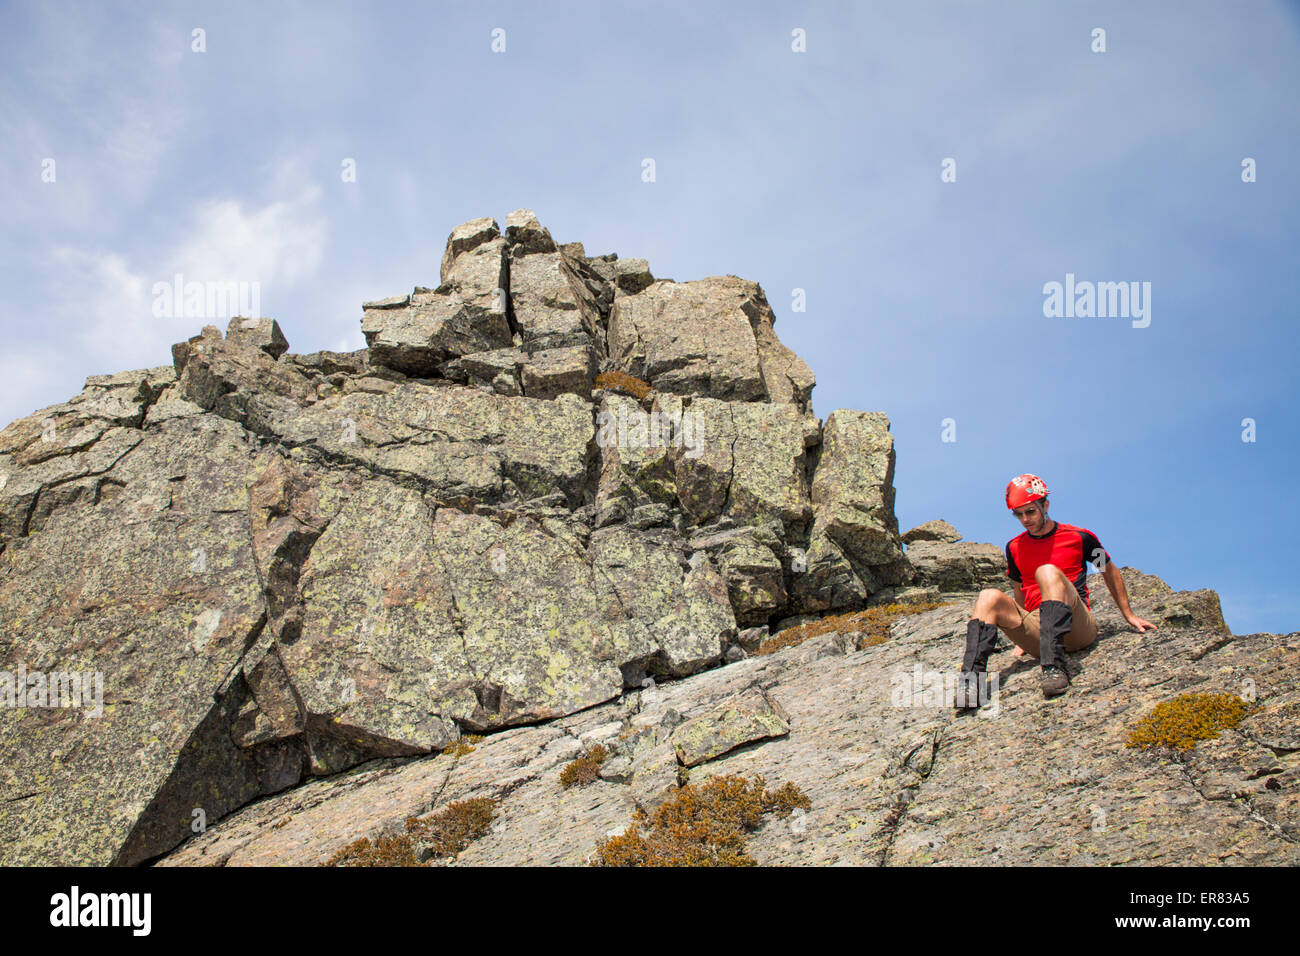 A climber down climbs a rocky summit. Stock Photo